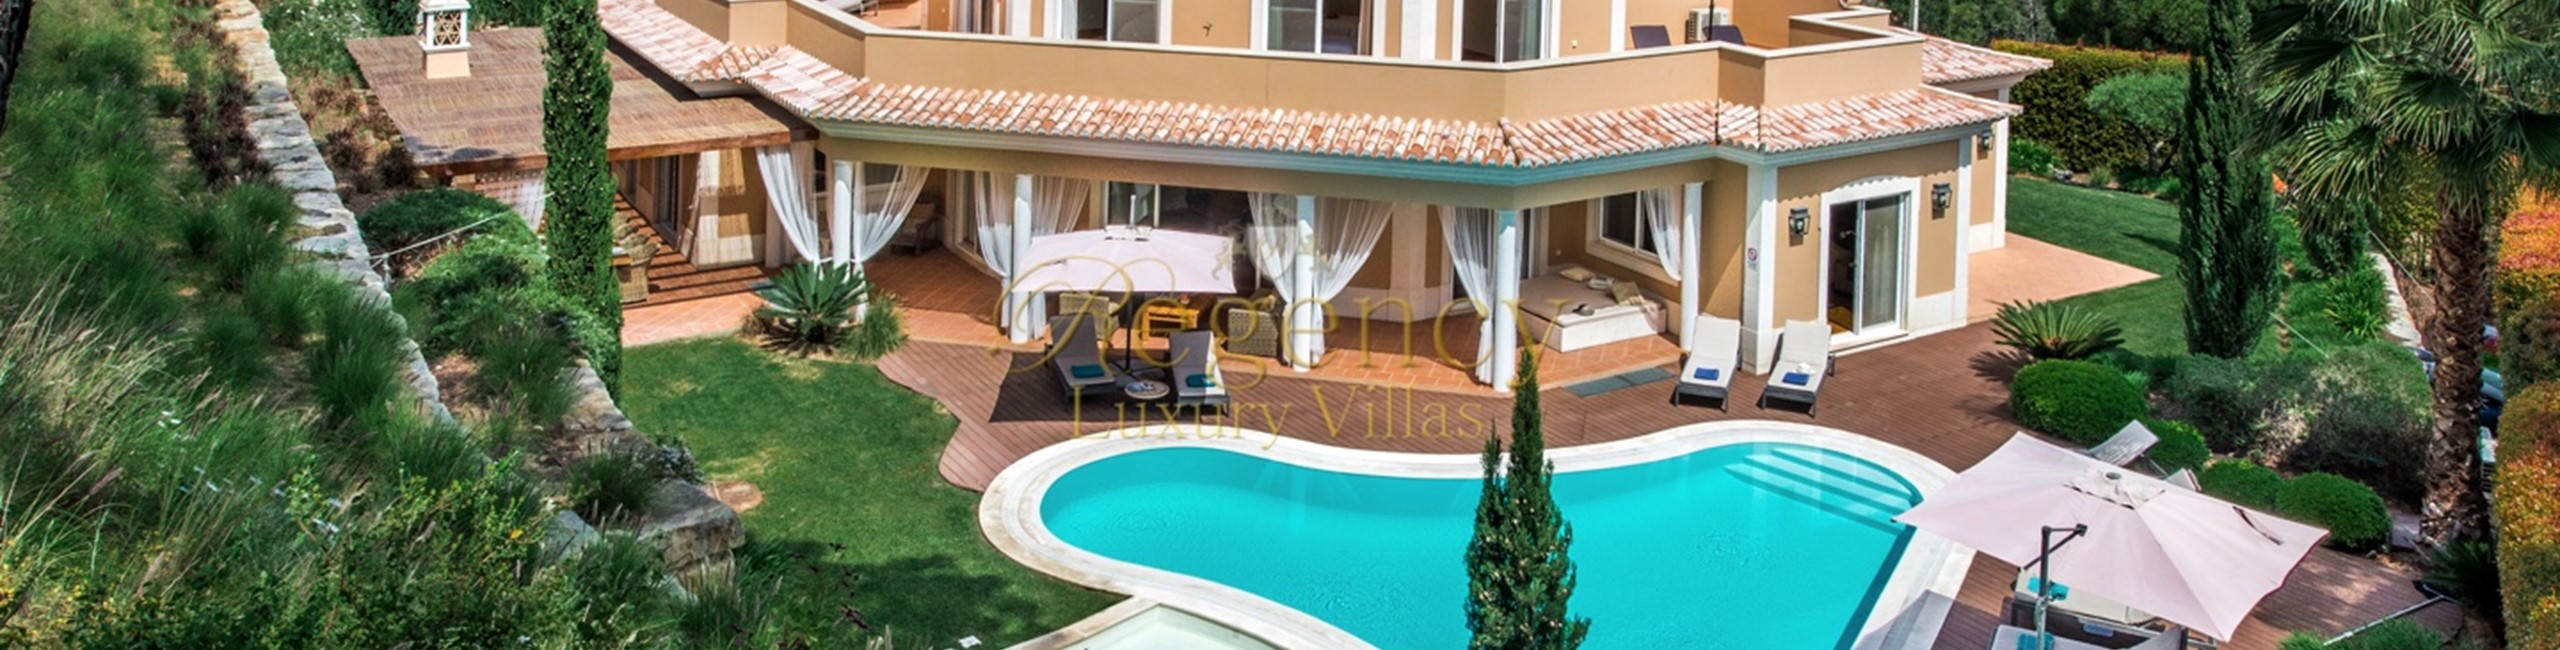 Villa For Rent In Quinta Do Lago Algarve Portugal